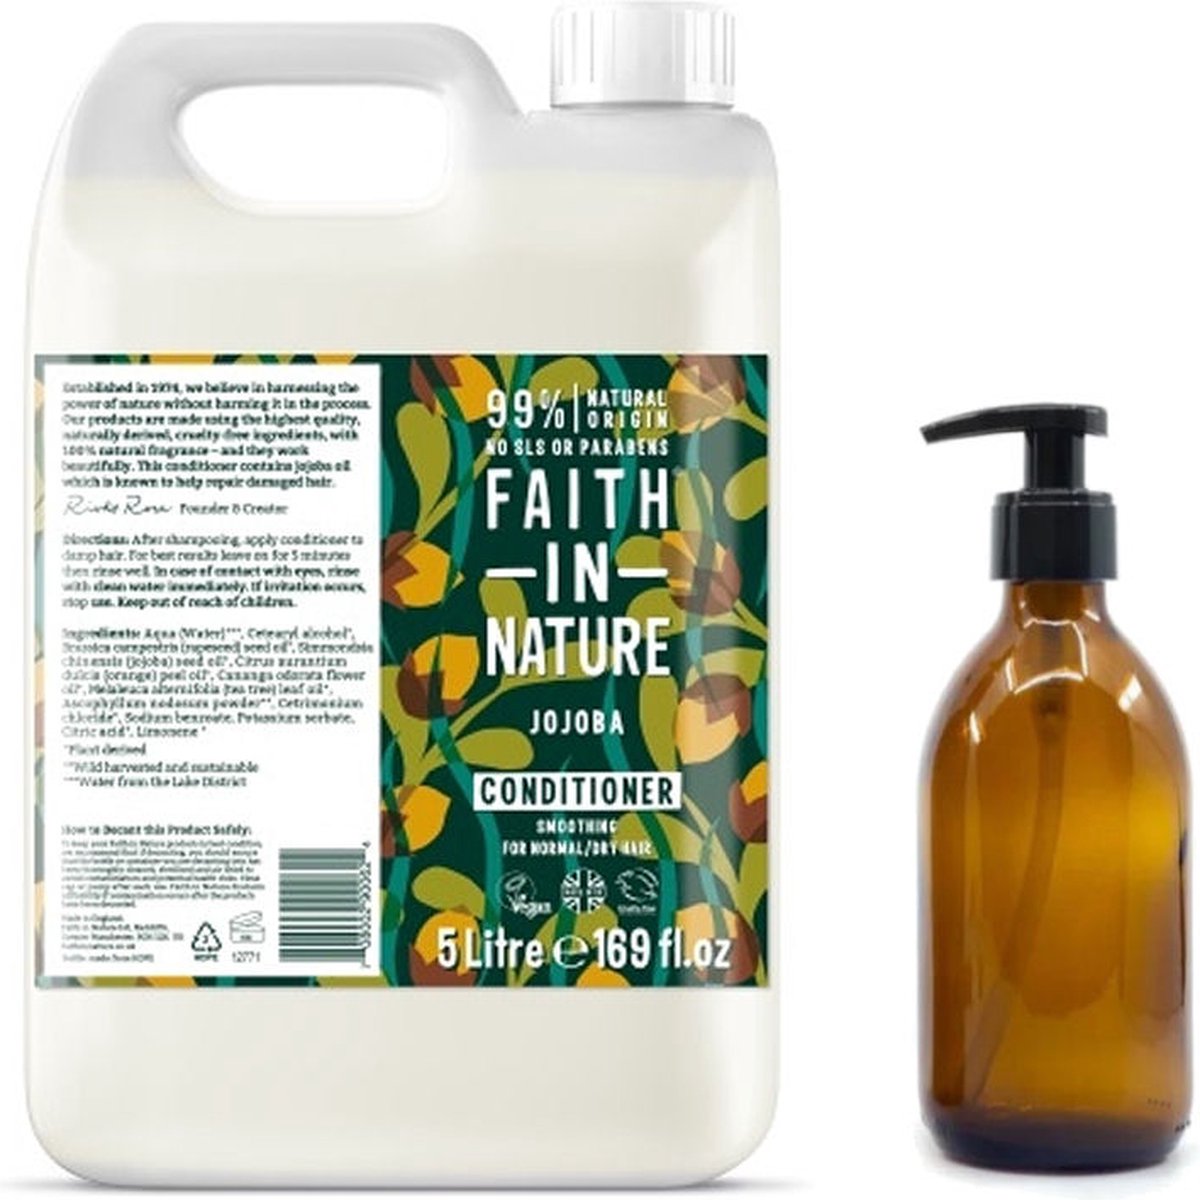 FAITH IN NATURE - Conditioner jojoba Refill 5 Liter - nu met GRATIS glaze refill fles 500ml